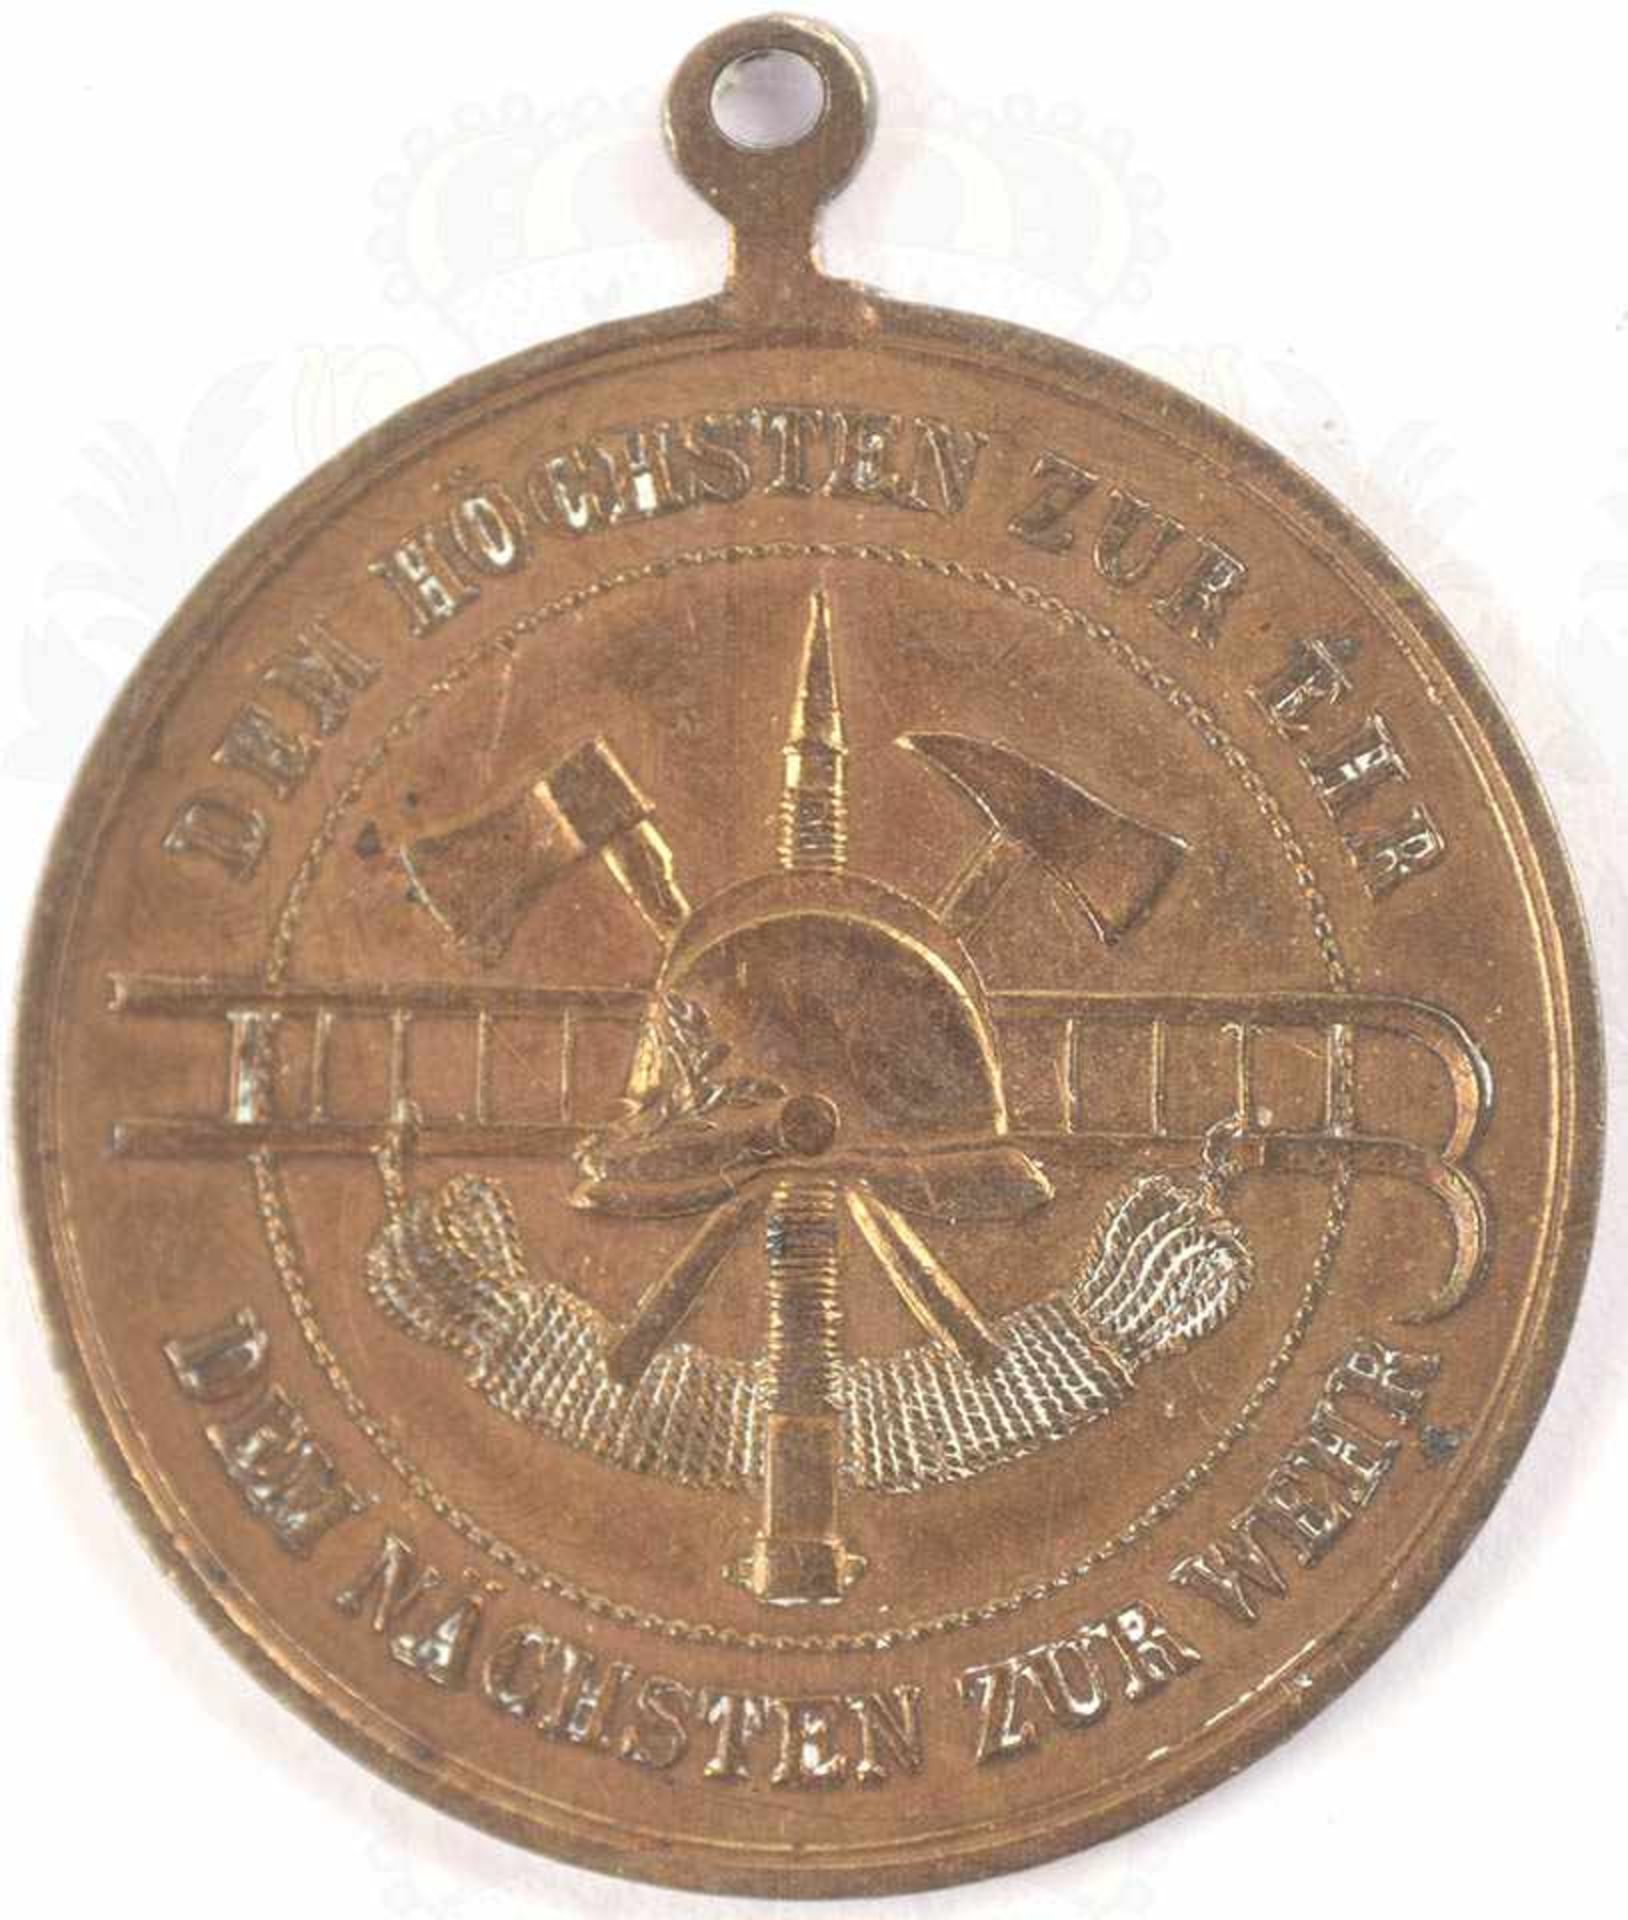 MEDAILLE XII. FEUERWEHRTAG CELLE 1889, Provinz Hannover, Bronze, Ring u. Band fehlen